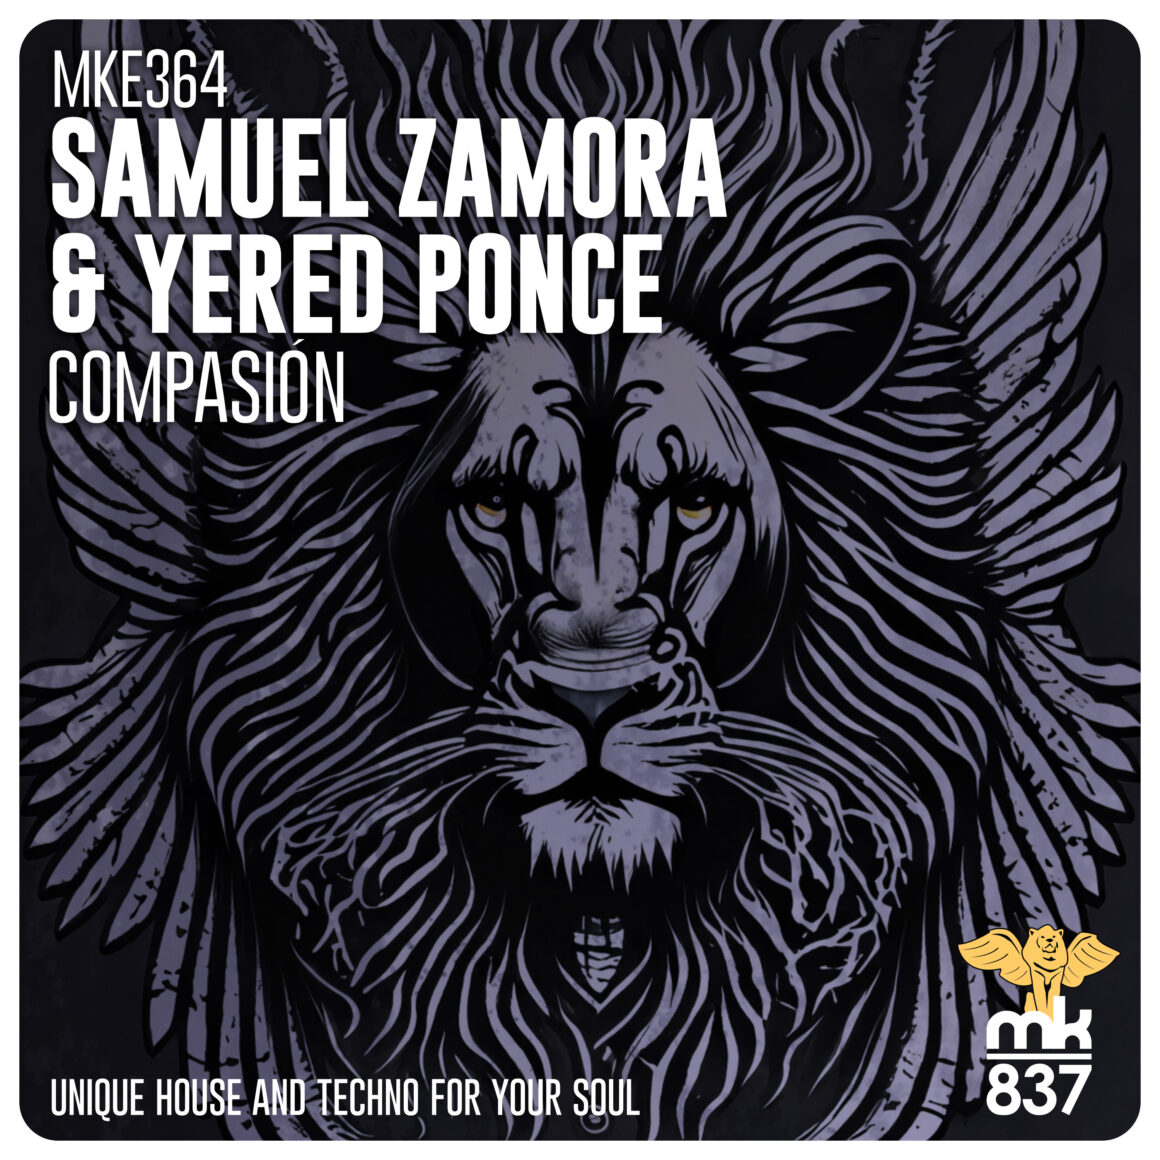 Samuel Zamora & Yered Ponce - Compasión